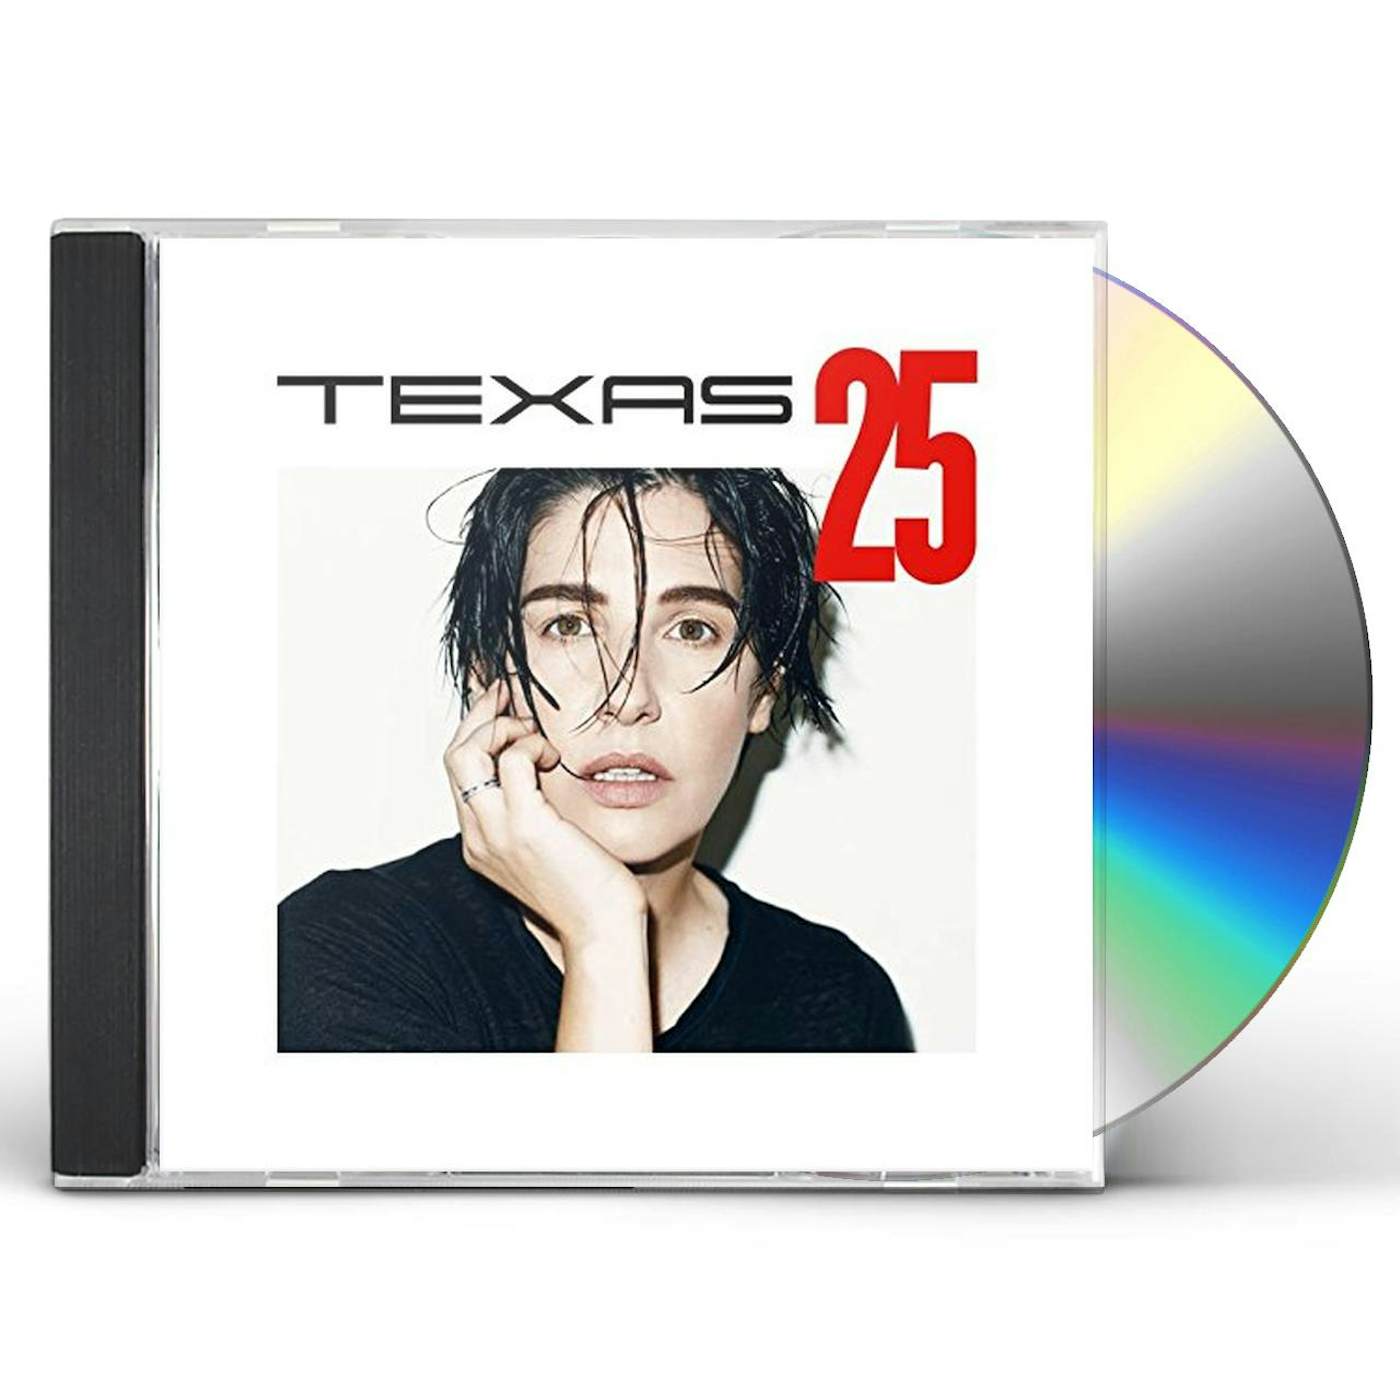 TEXAS 25 CD